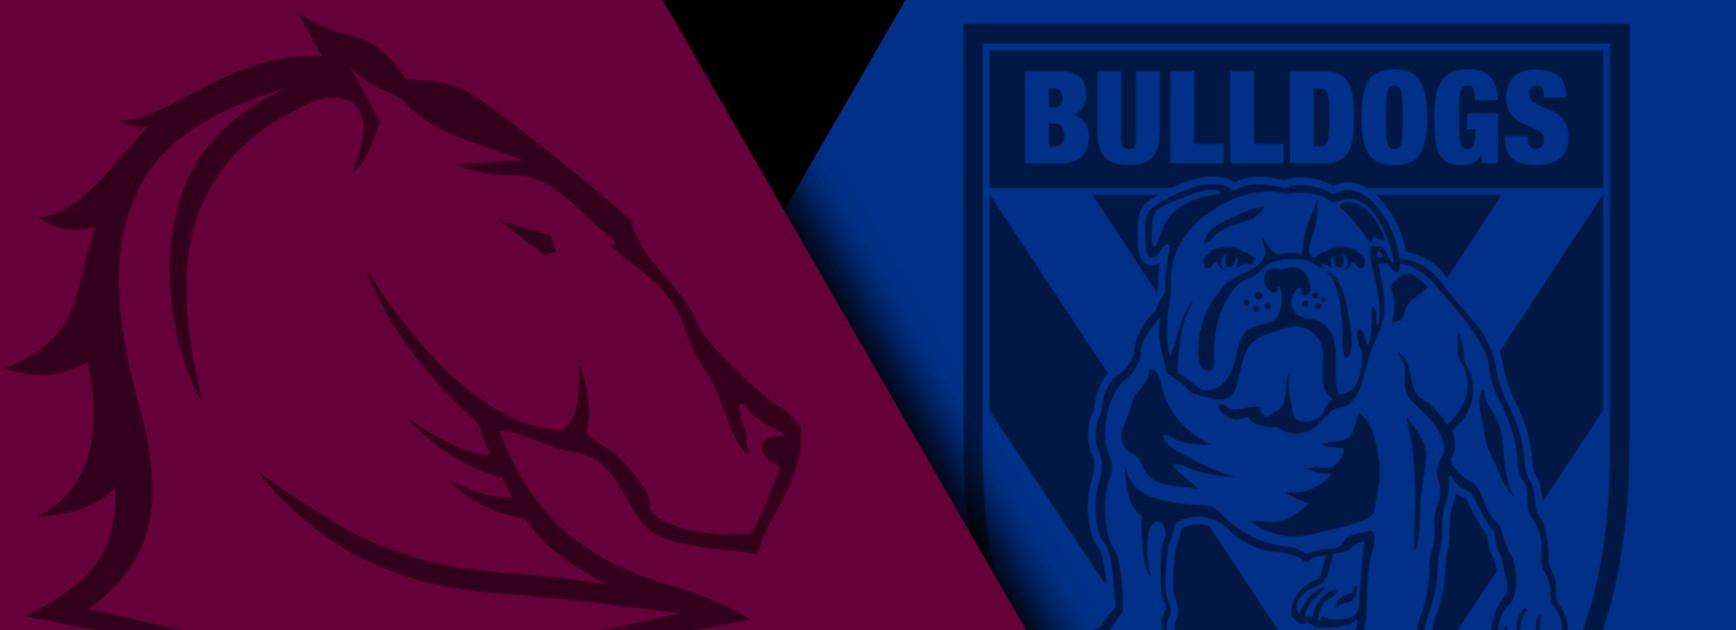 Broncos-Bulldogs preview.